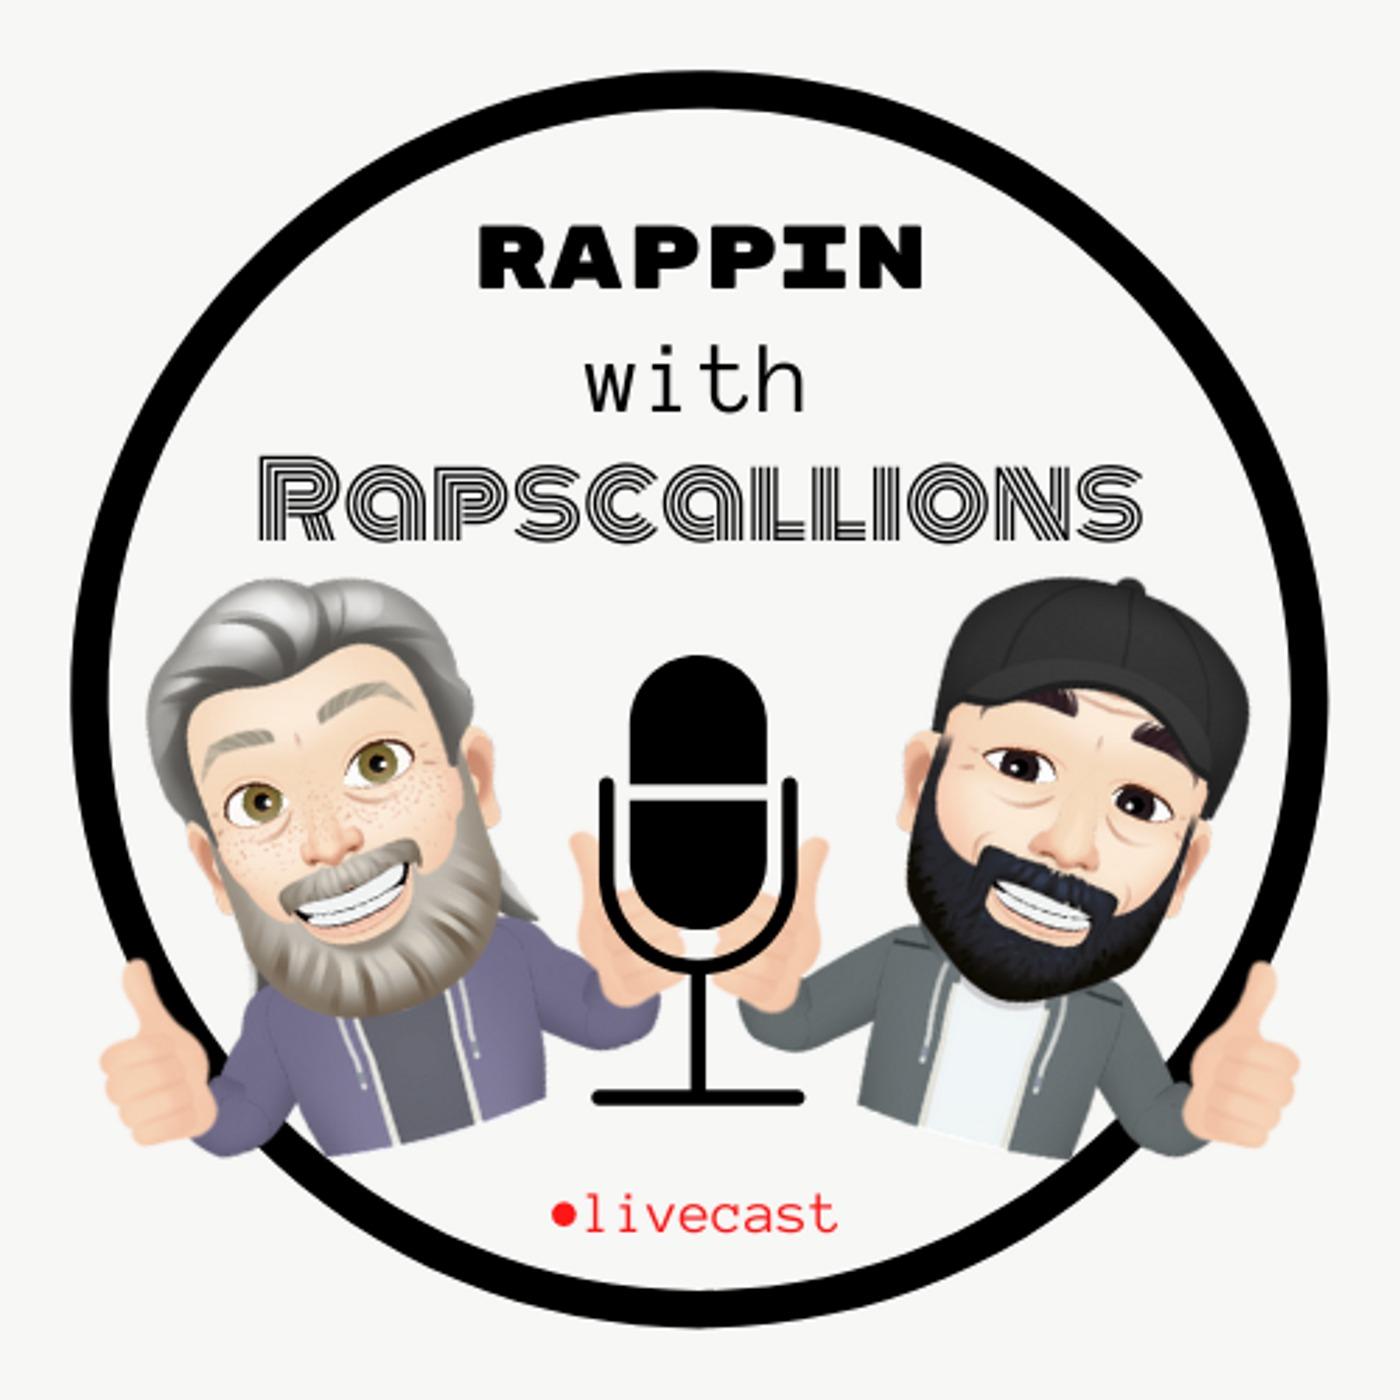 Rappin with RapScallions